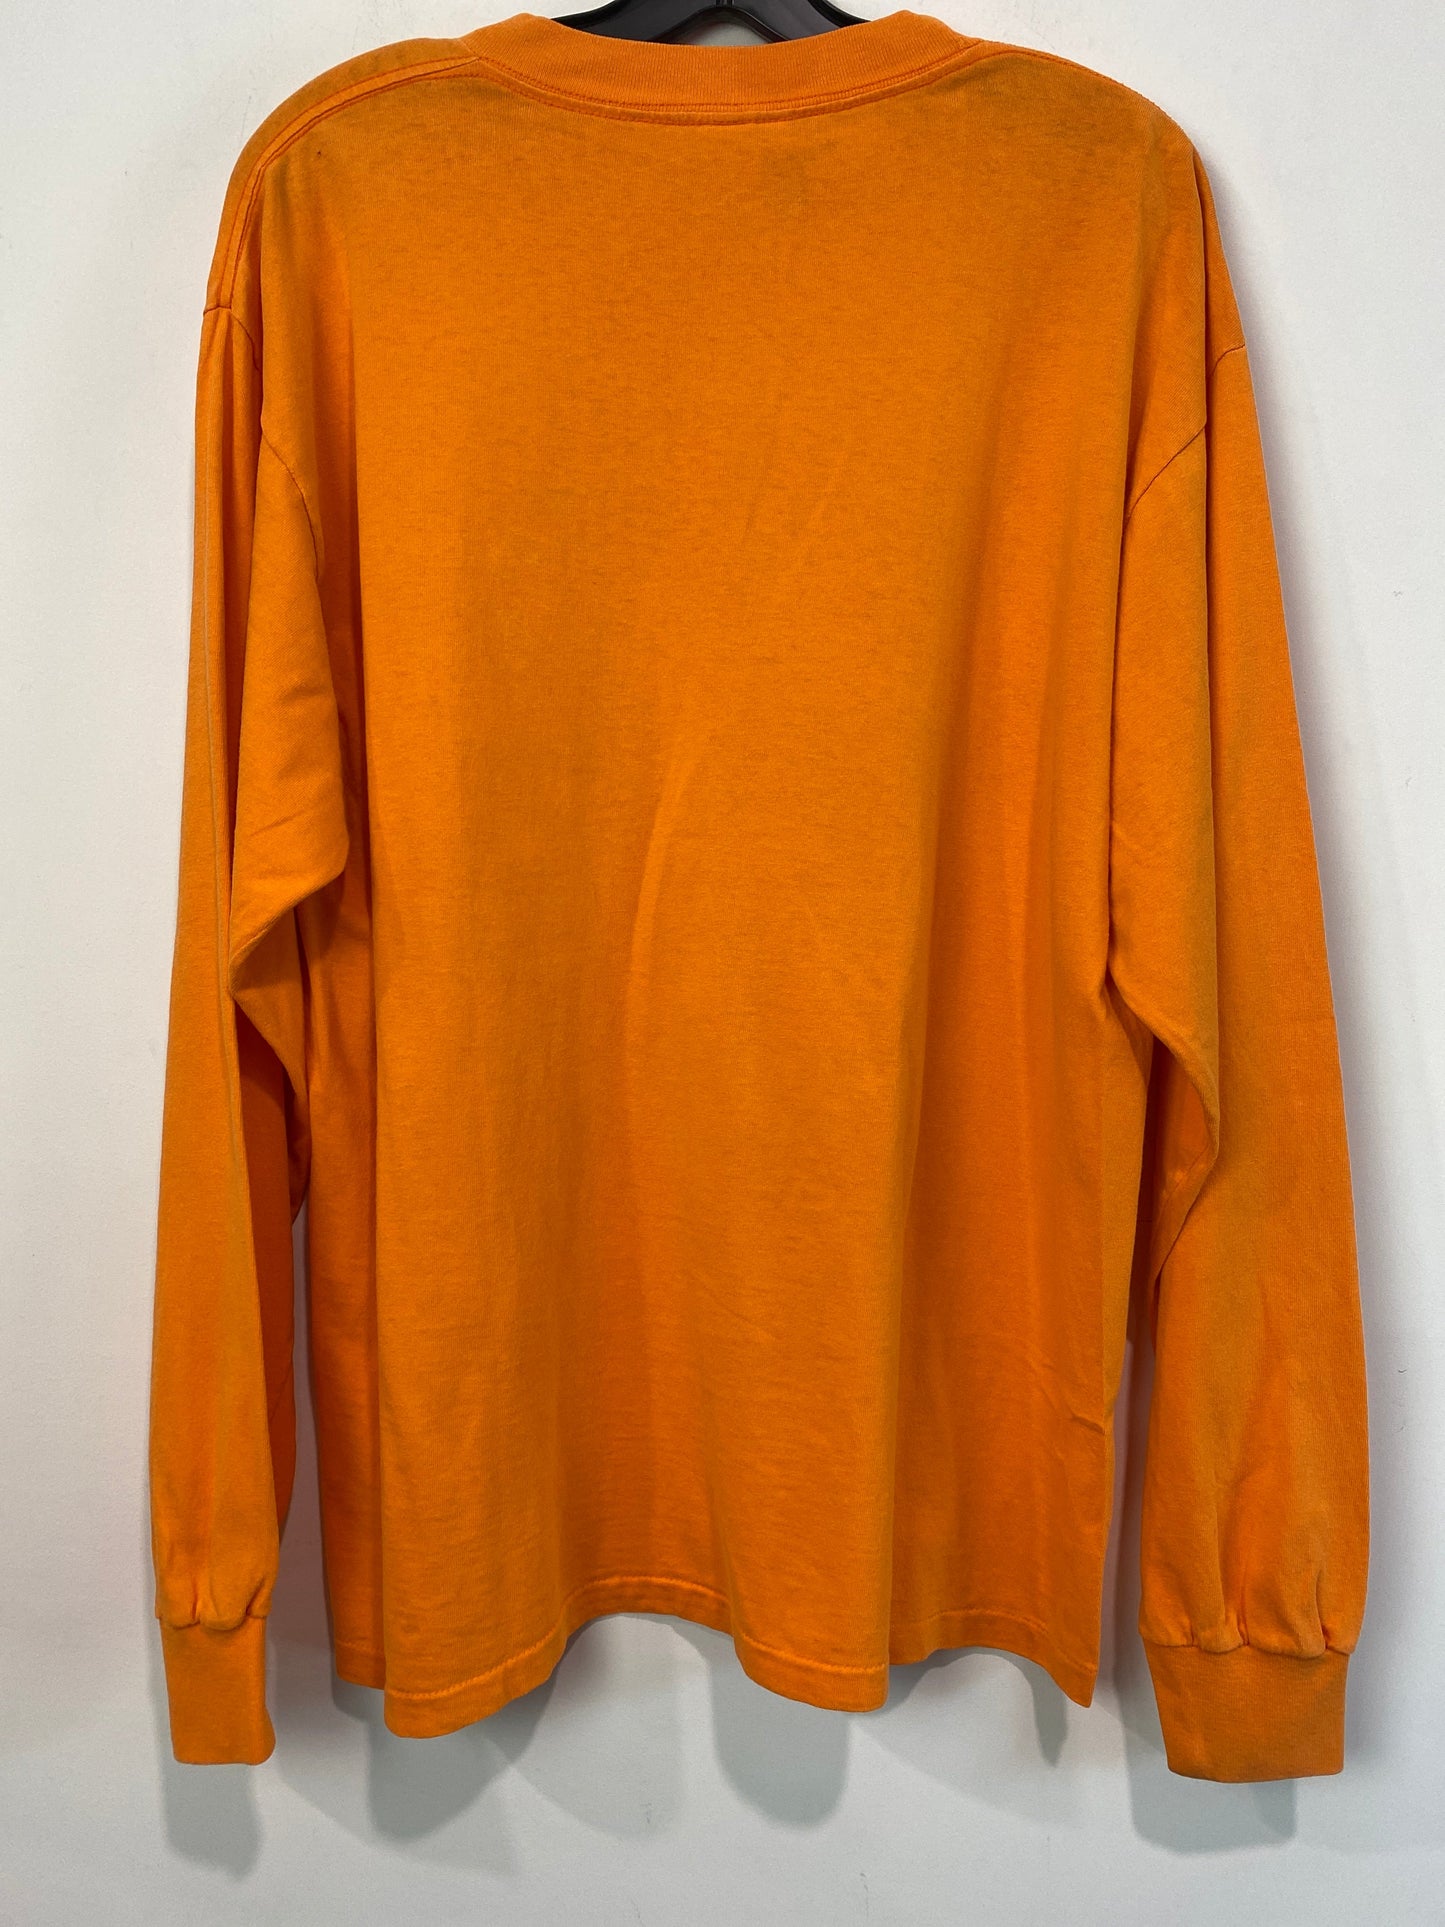 Orange Top Long Sleeve Clothes Mentor, Size L